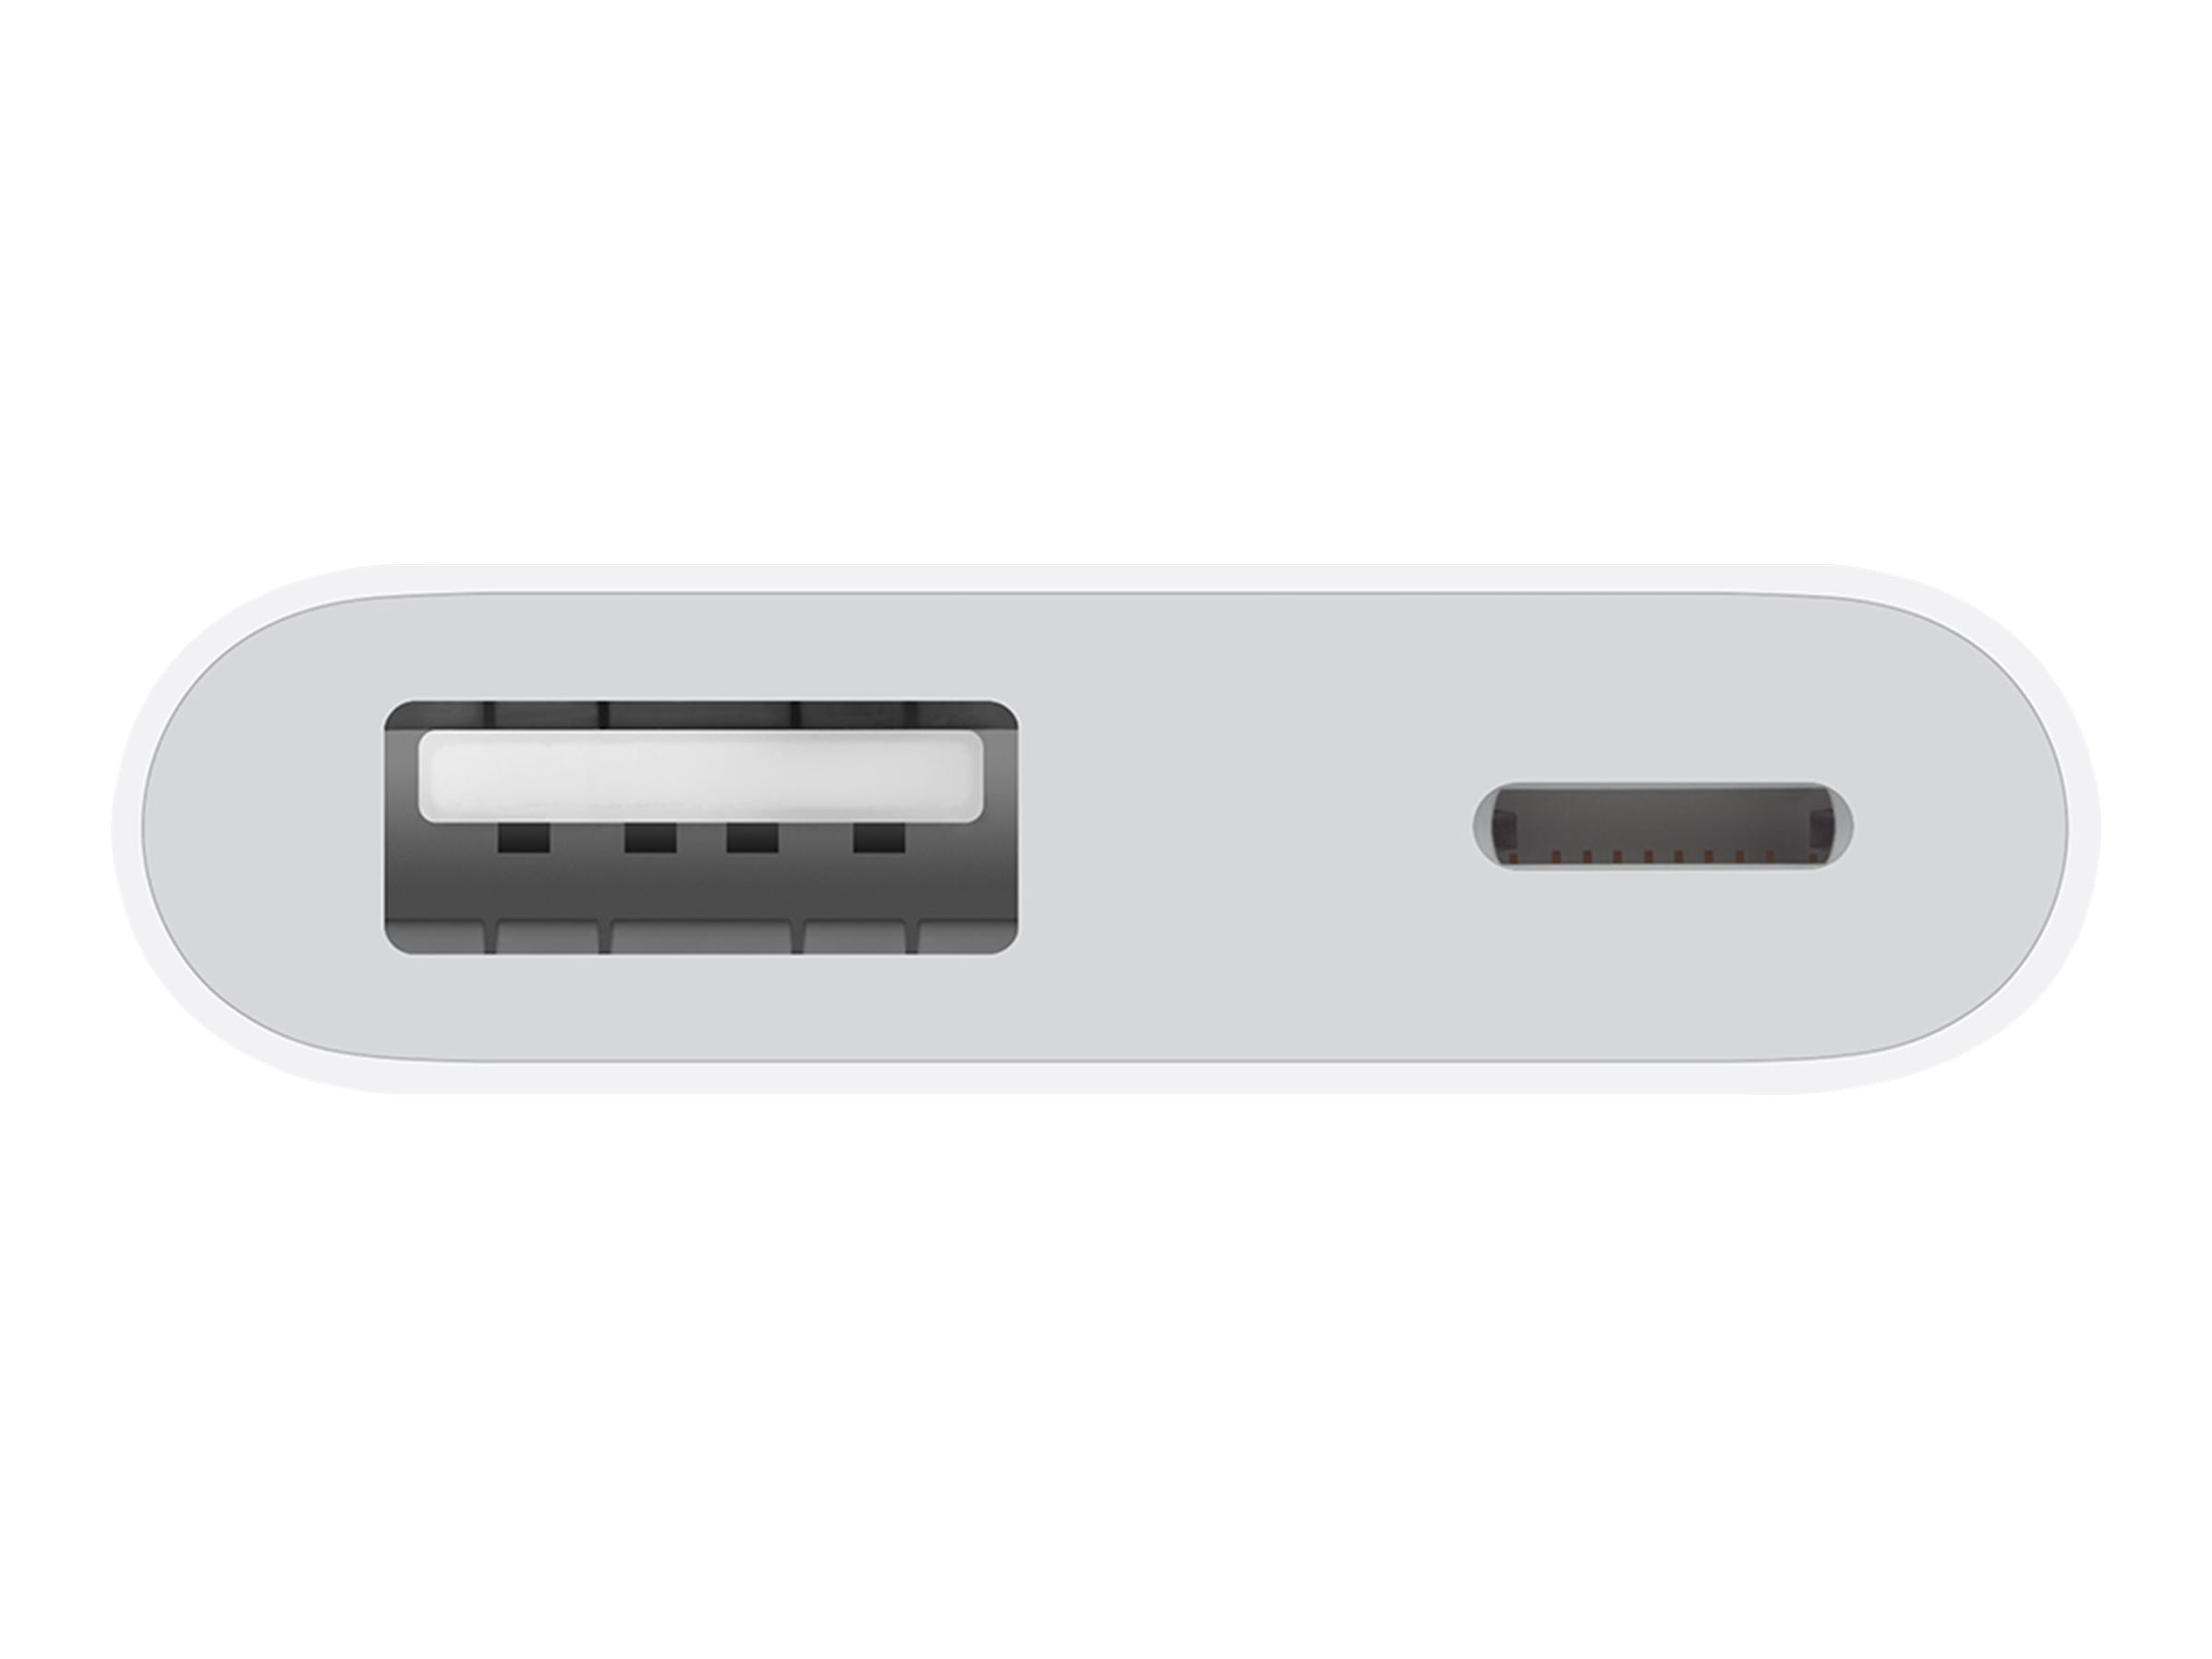 Apple Lightning to USB Camera Adapter, White (MK0W2AM/A)